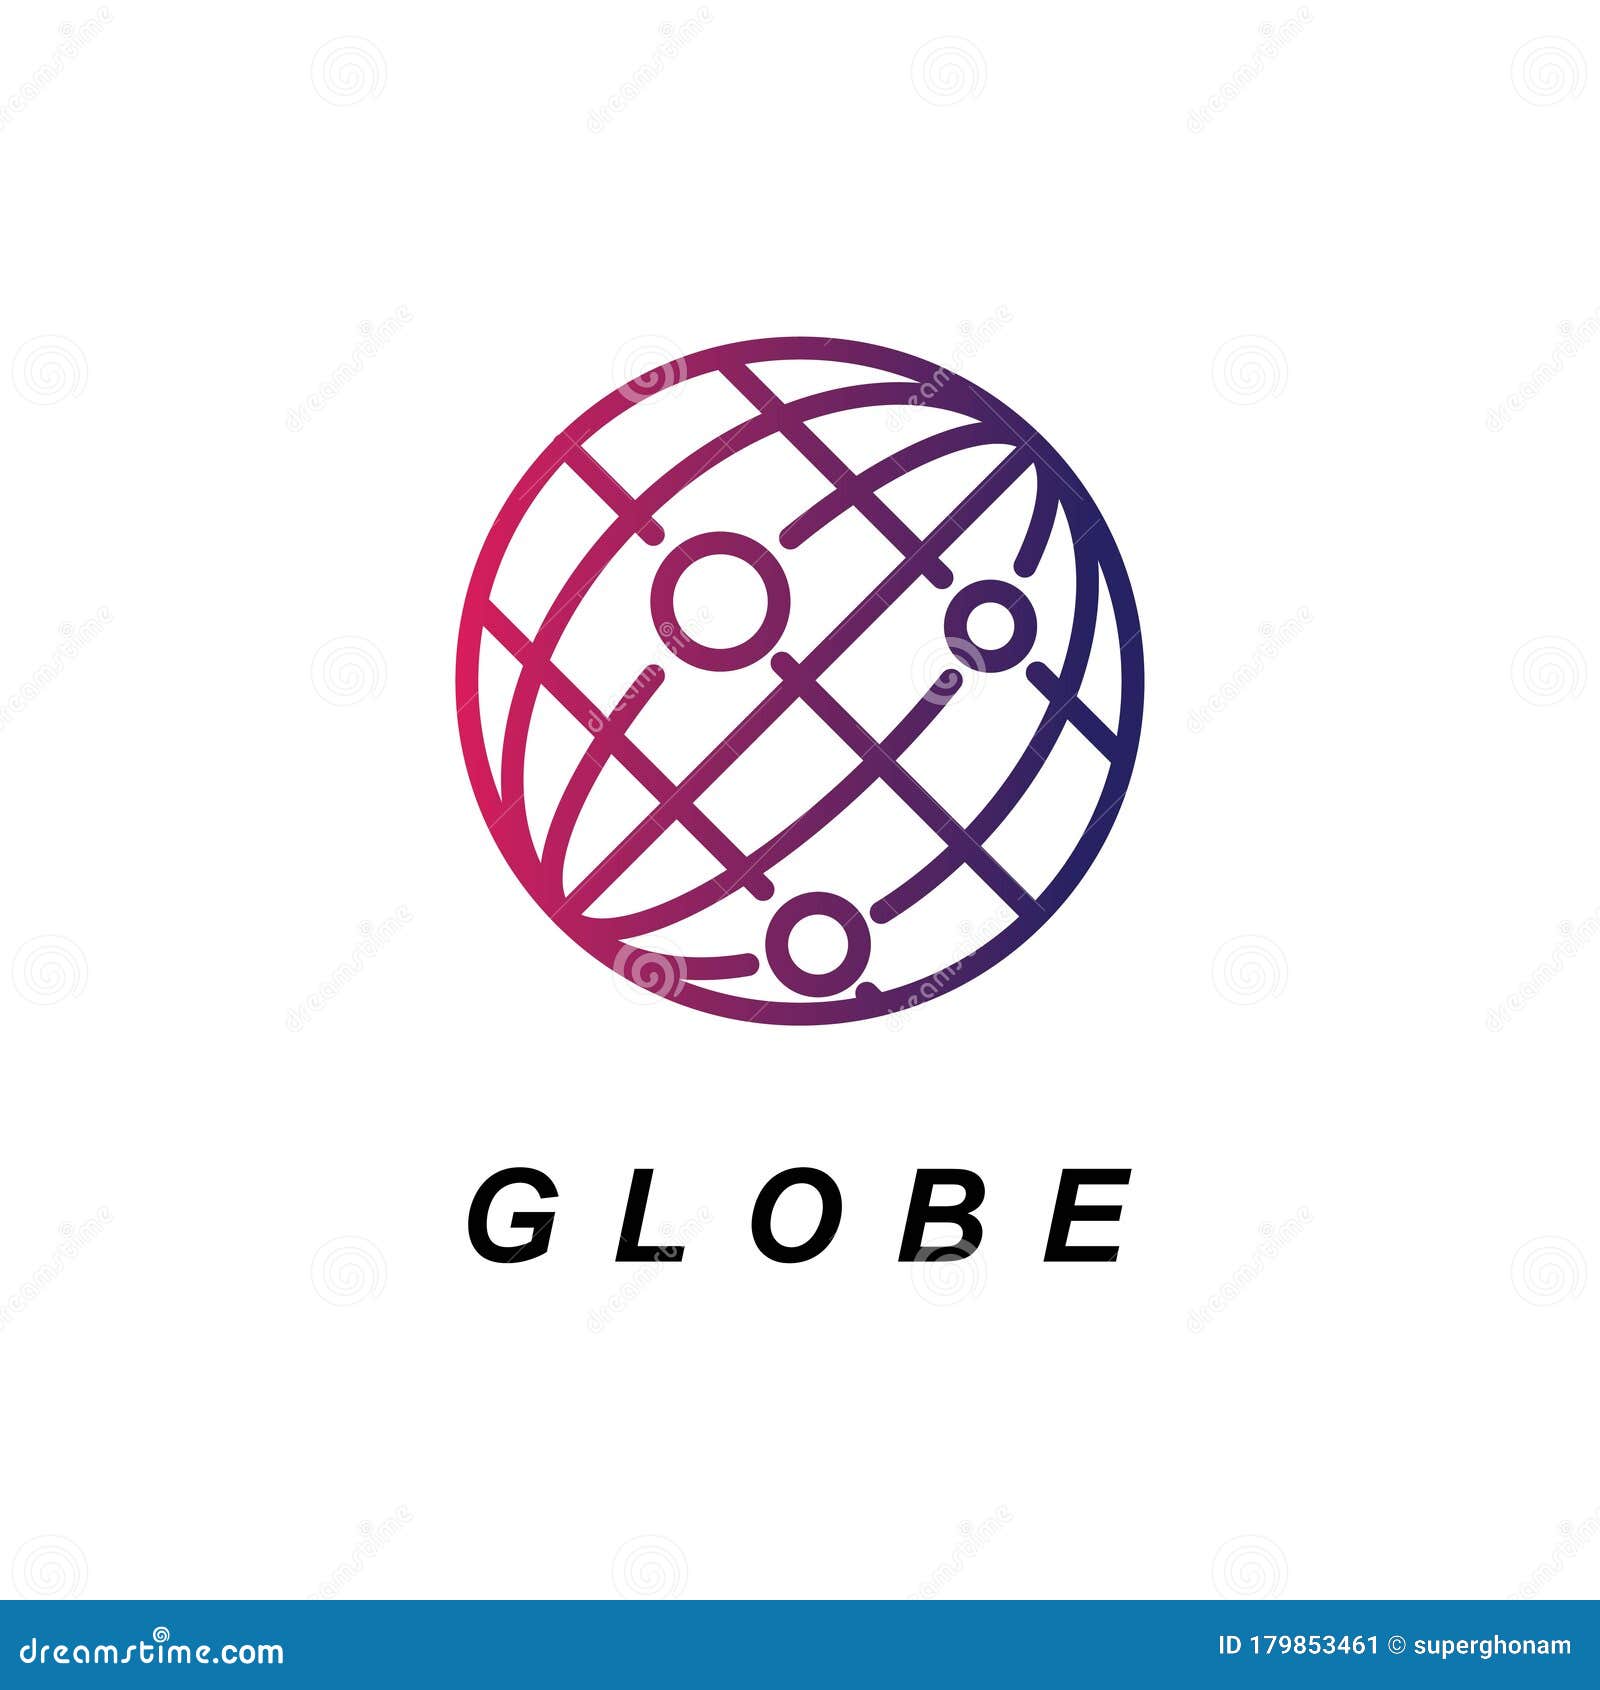 globe logo ideas 1